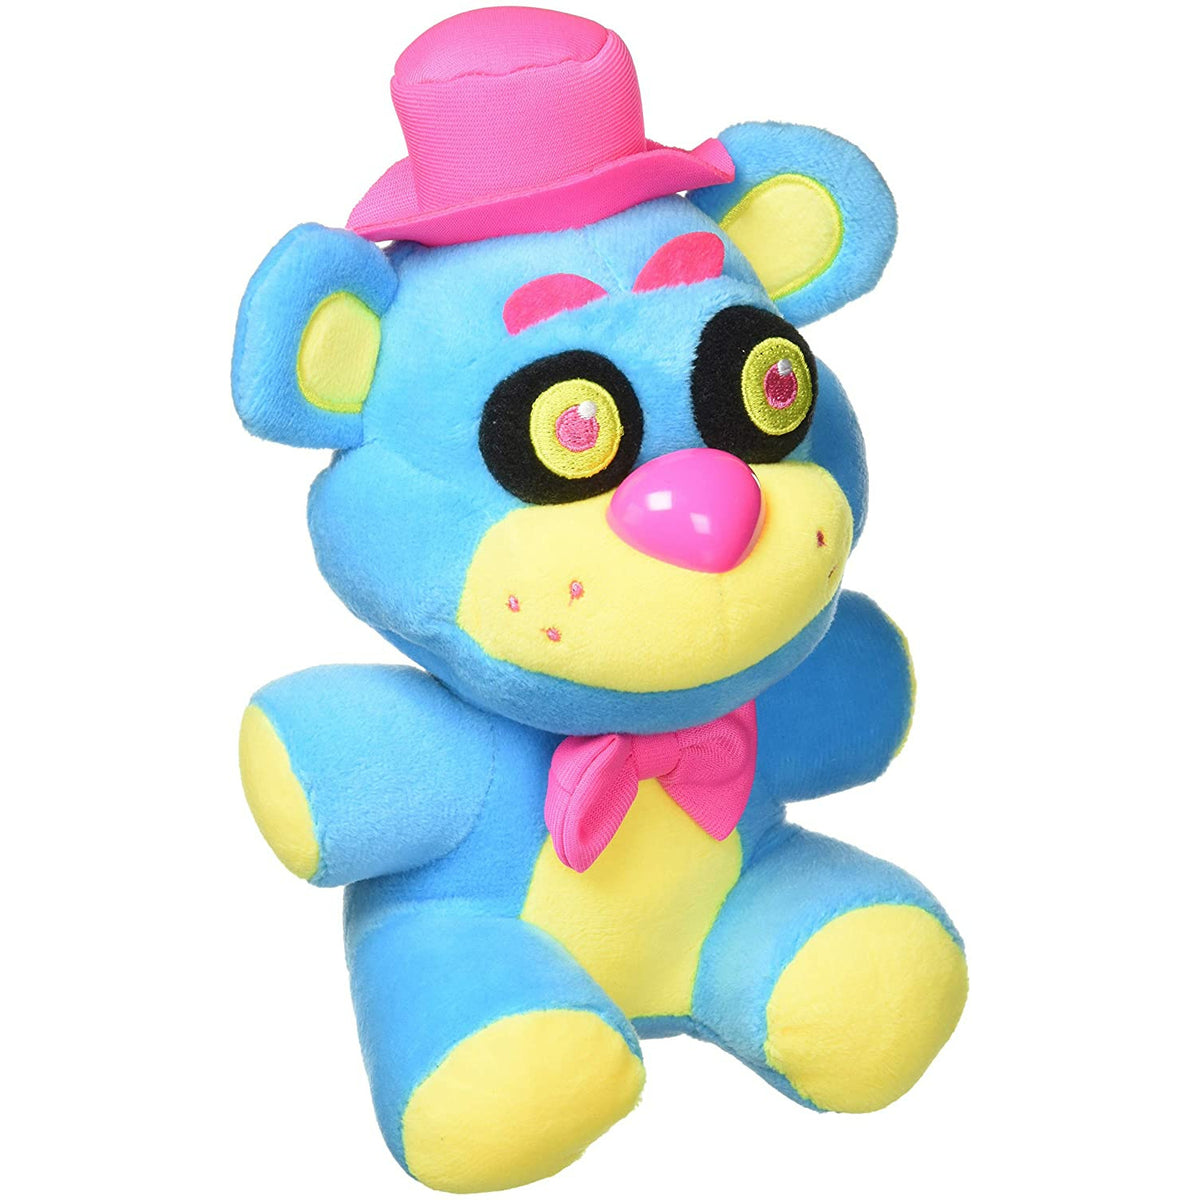 Funko Plush: Five Nights at Freddy's - Foxy Neon Plush Collectible Plu –  Wonder Toys